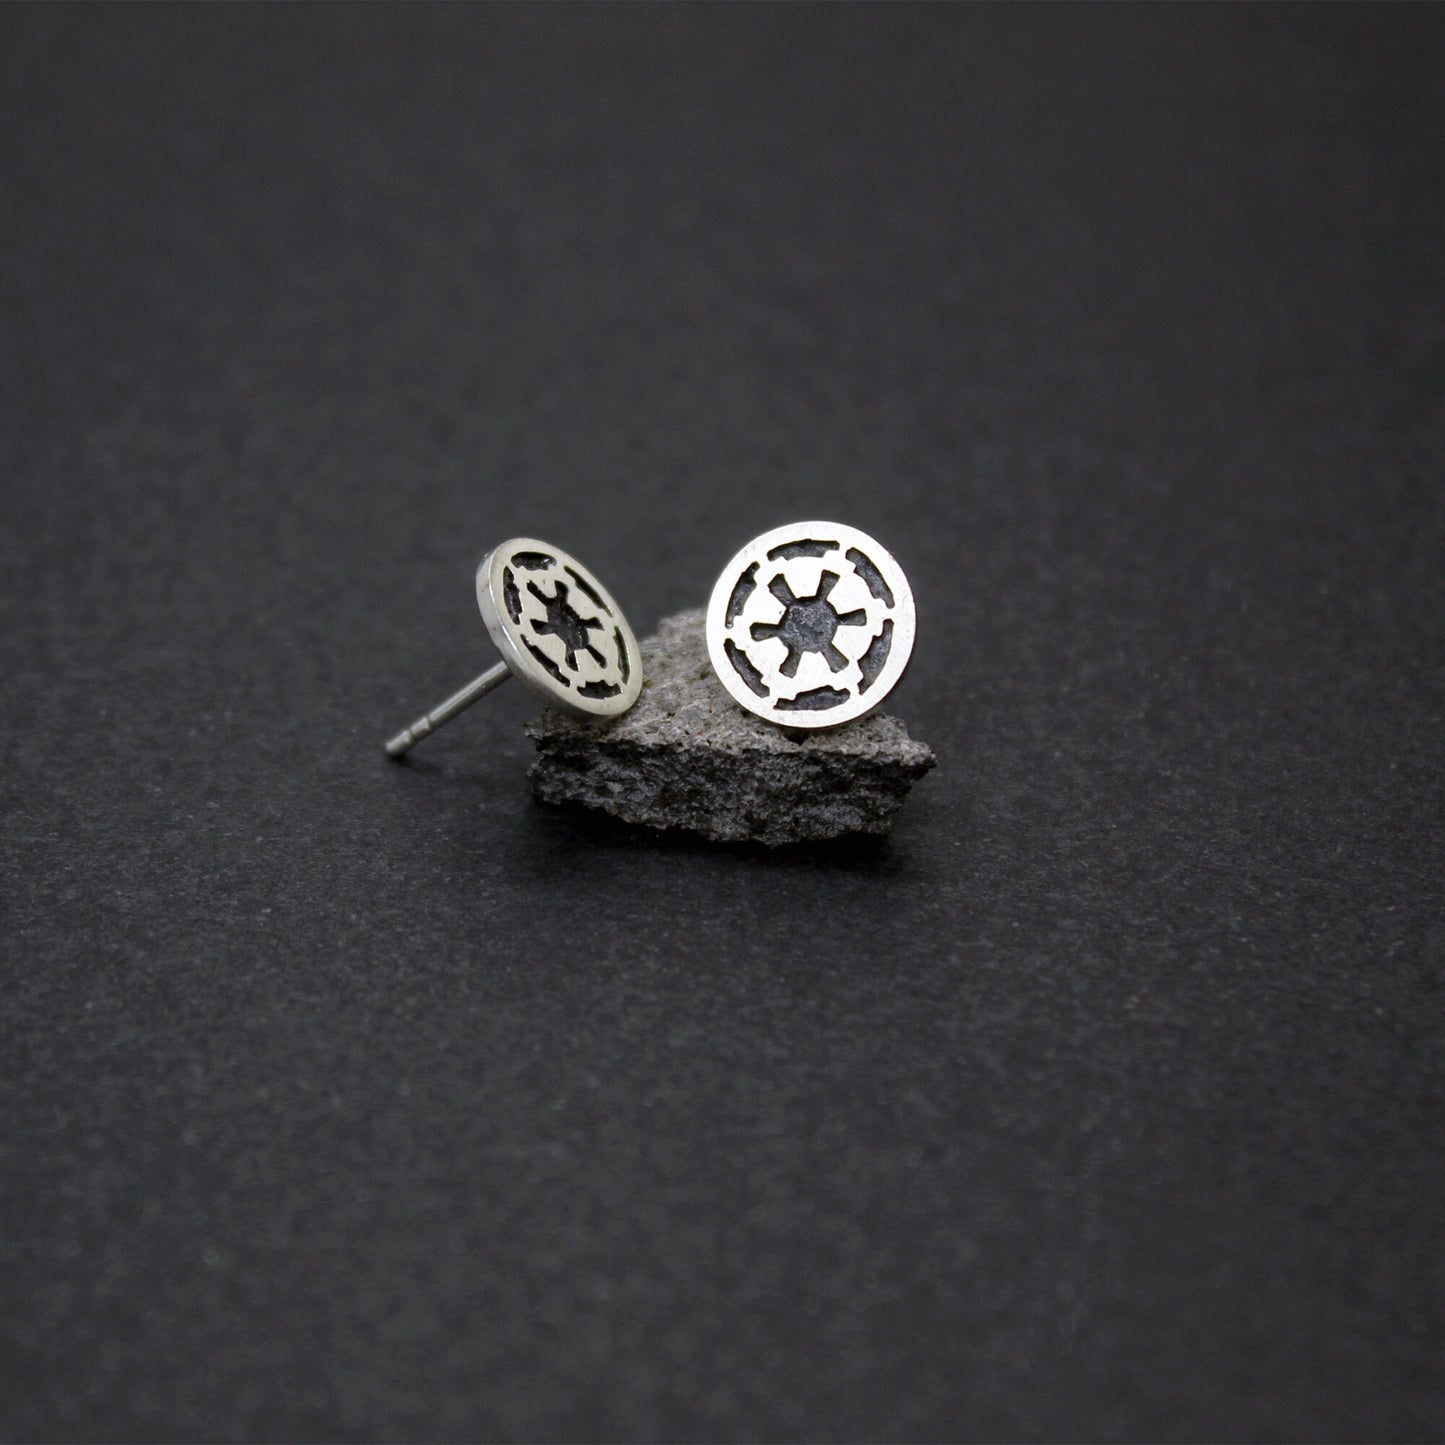 Galactic Empire symbol earrings in 925 silver